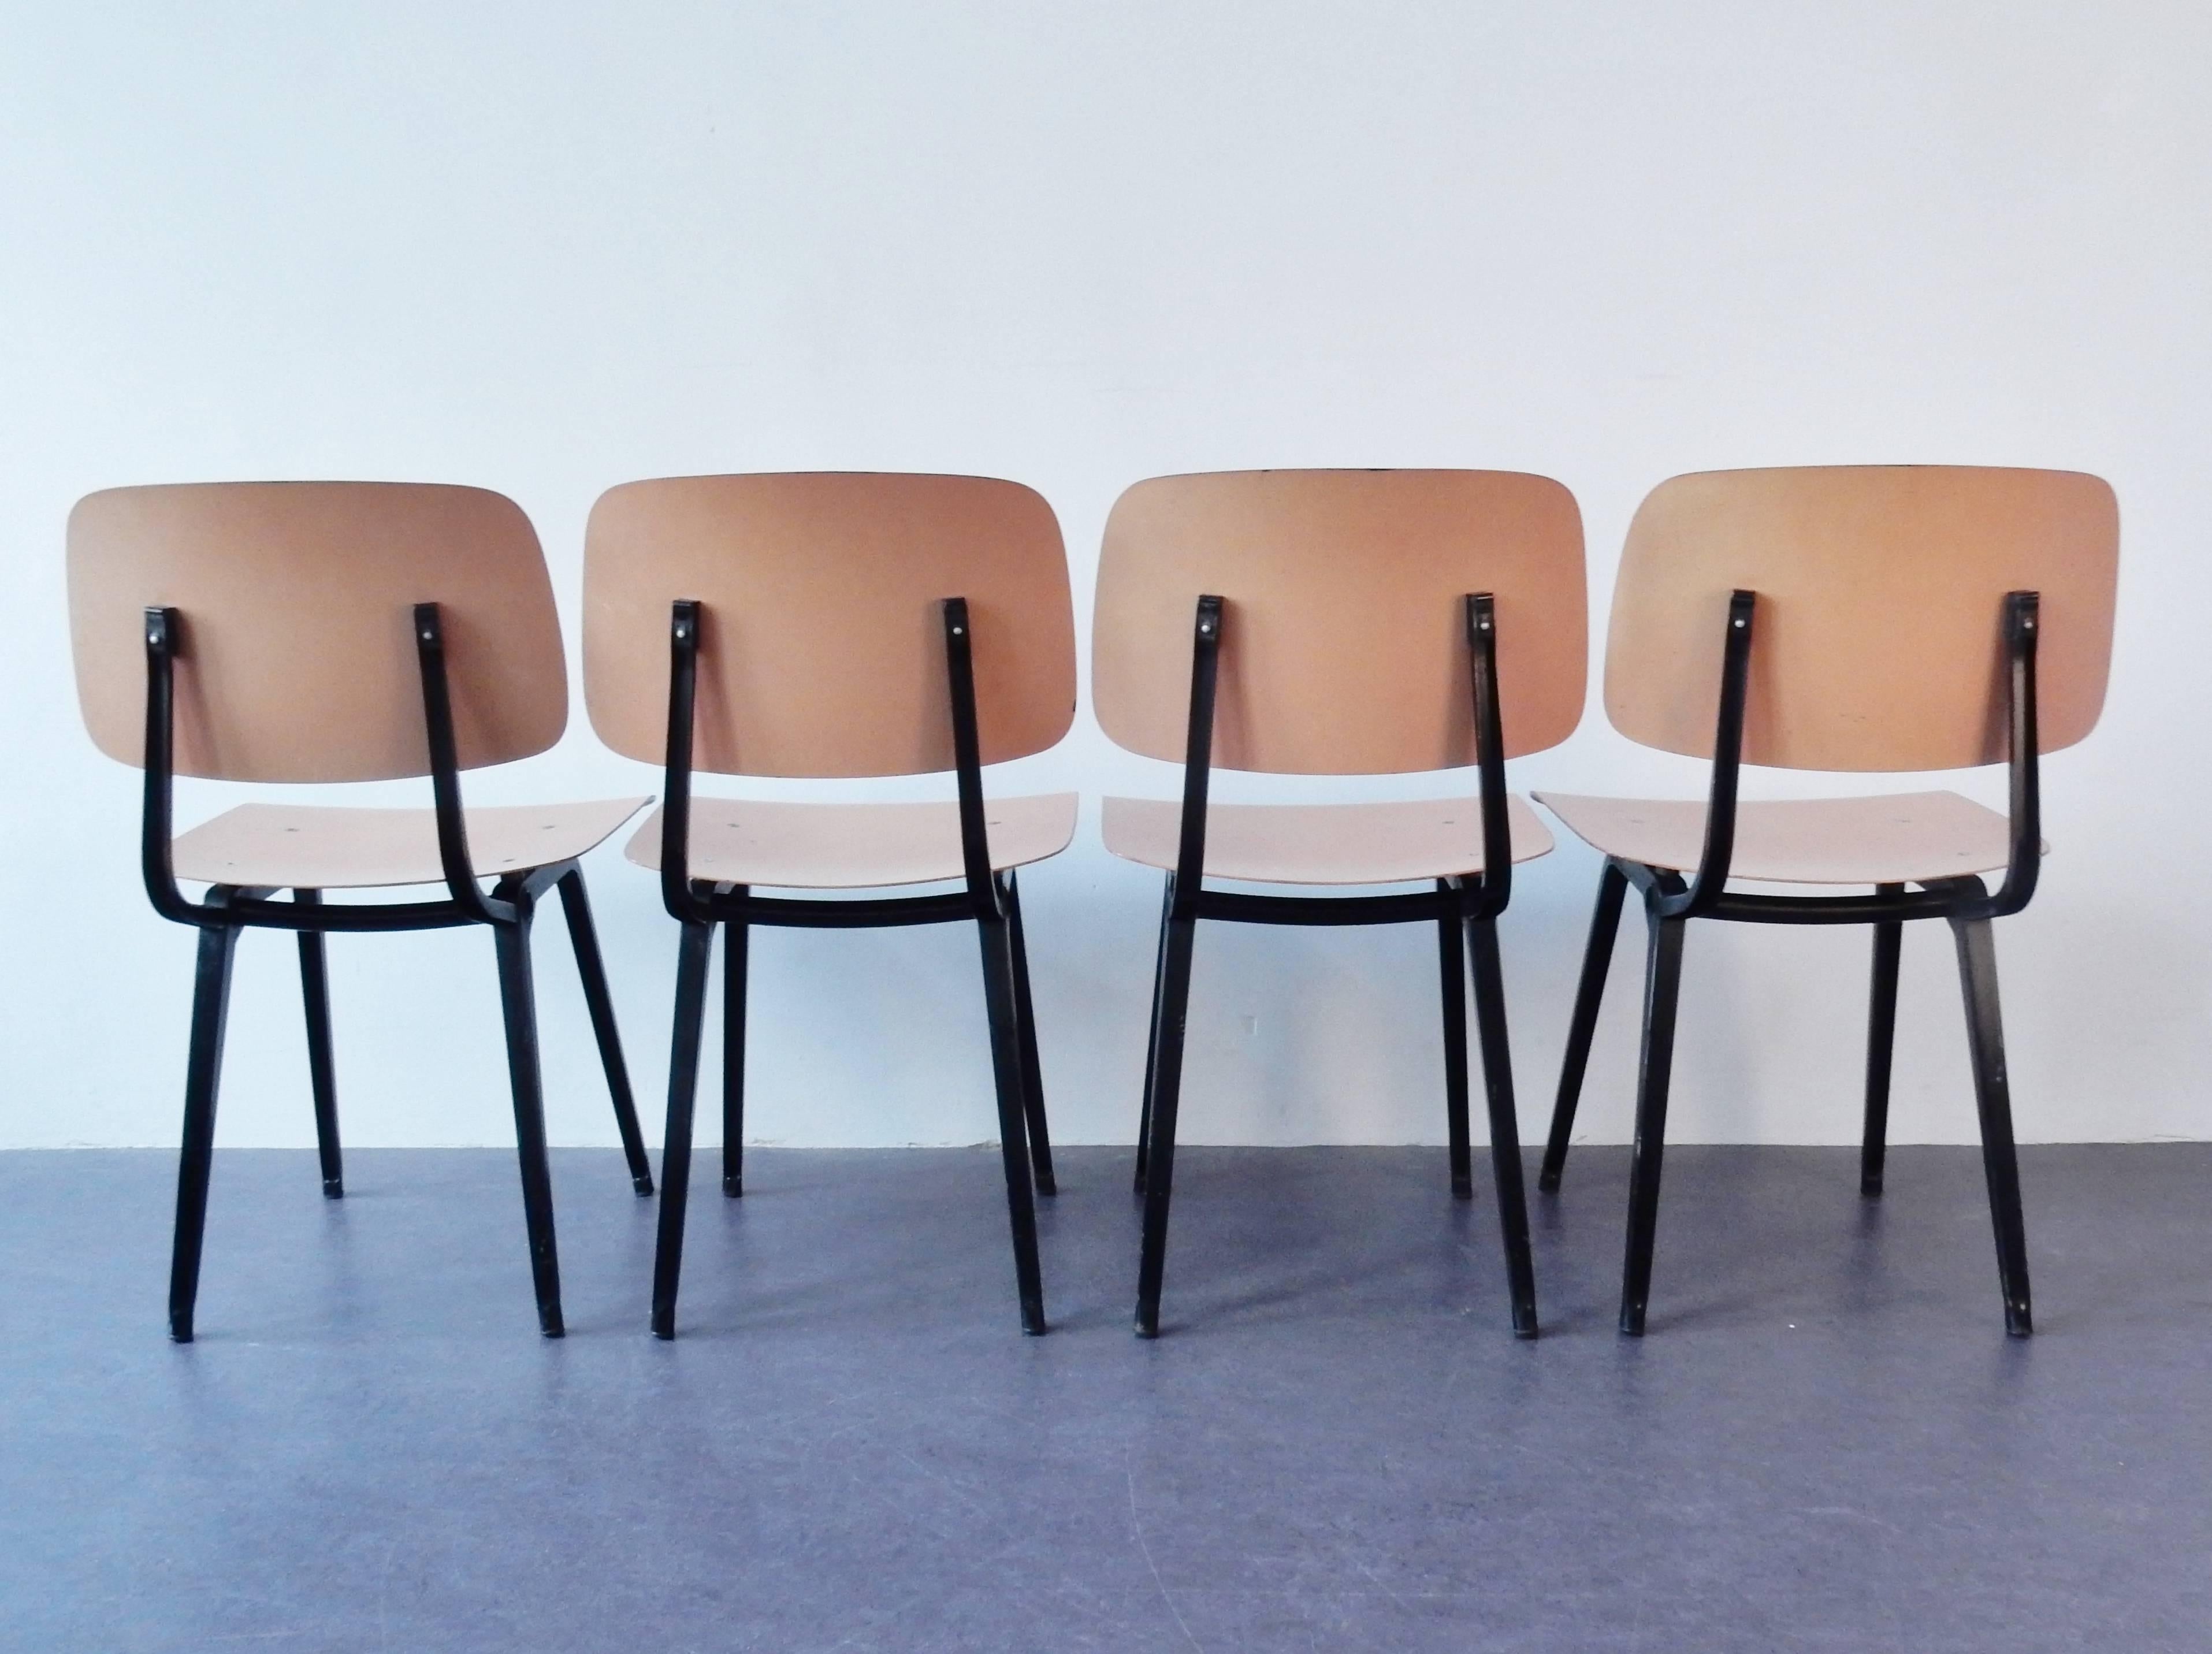 Metal Set of Four Industrial Chairs, Model Revolt by Friso Kramer for Ahrend de Cirkel